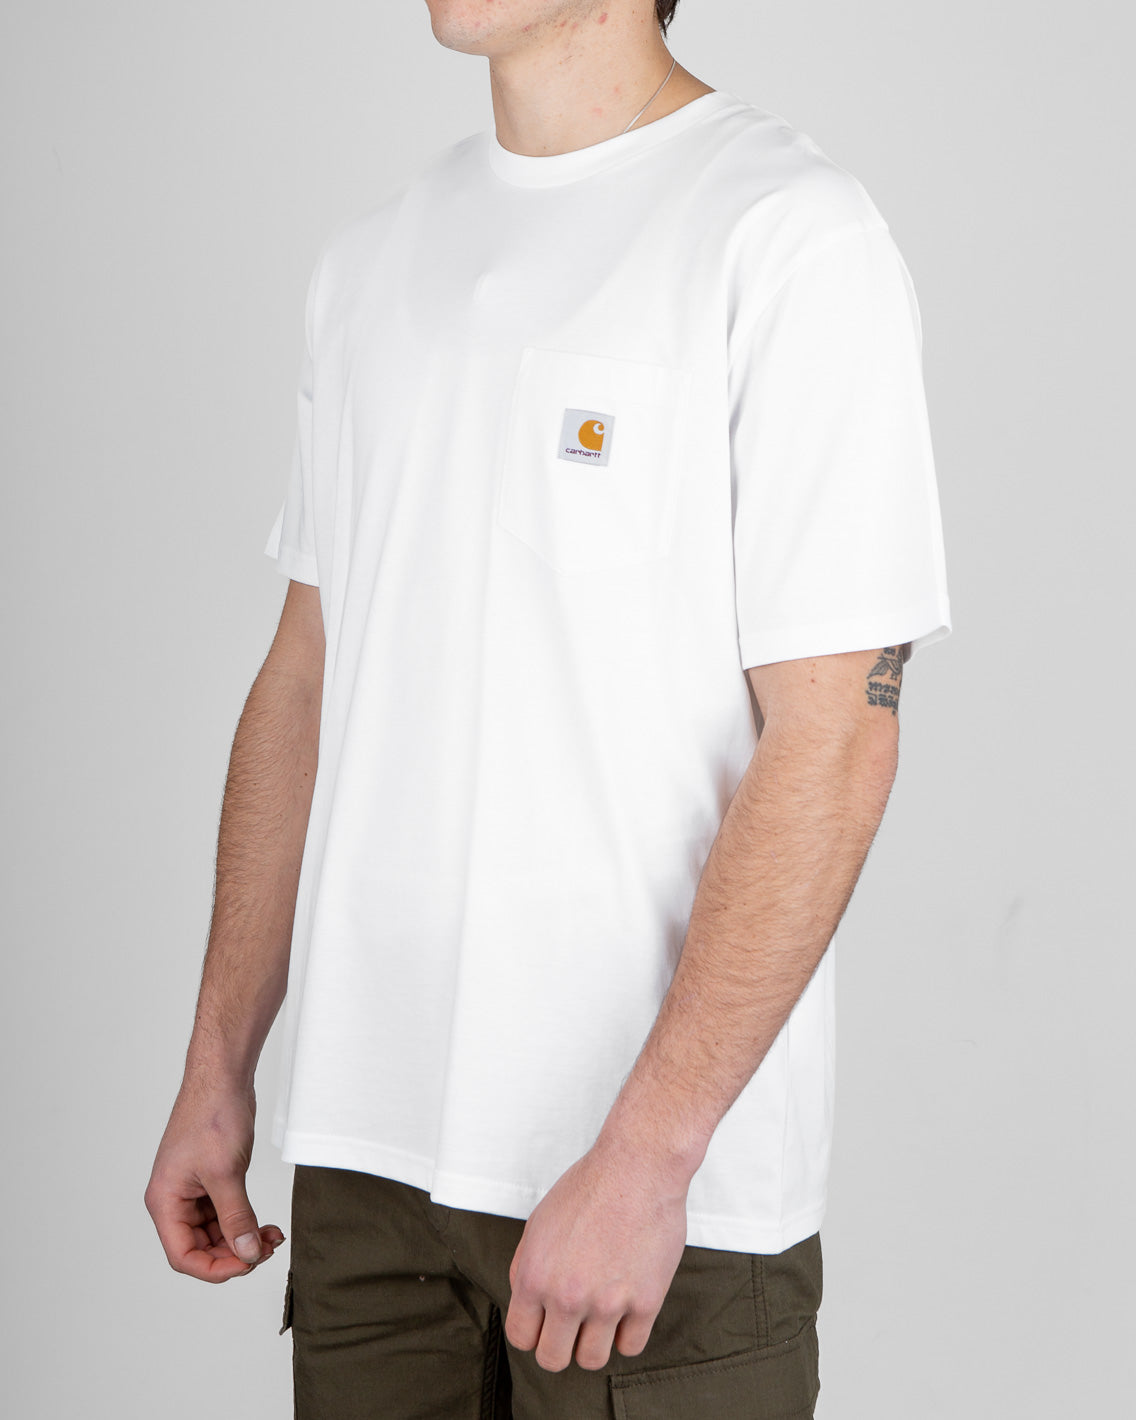 Carhartt - Pocket T-Shirt - White